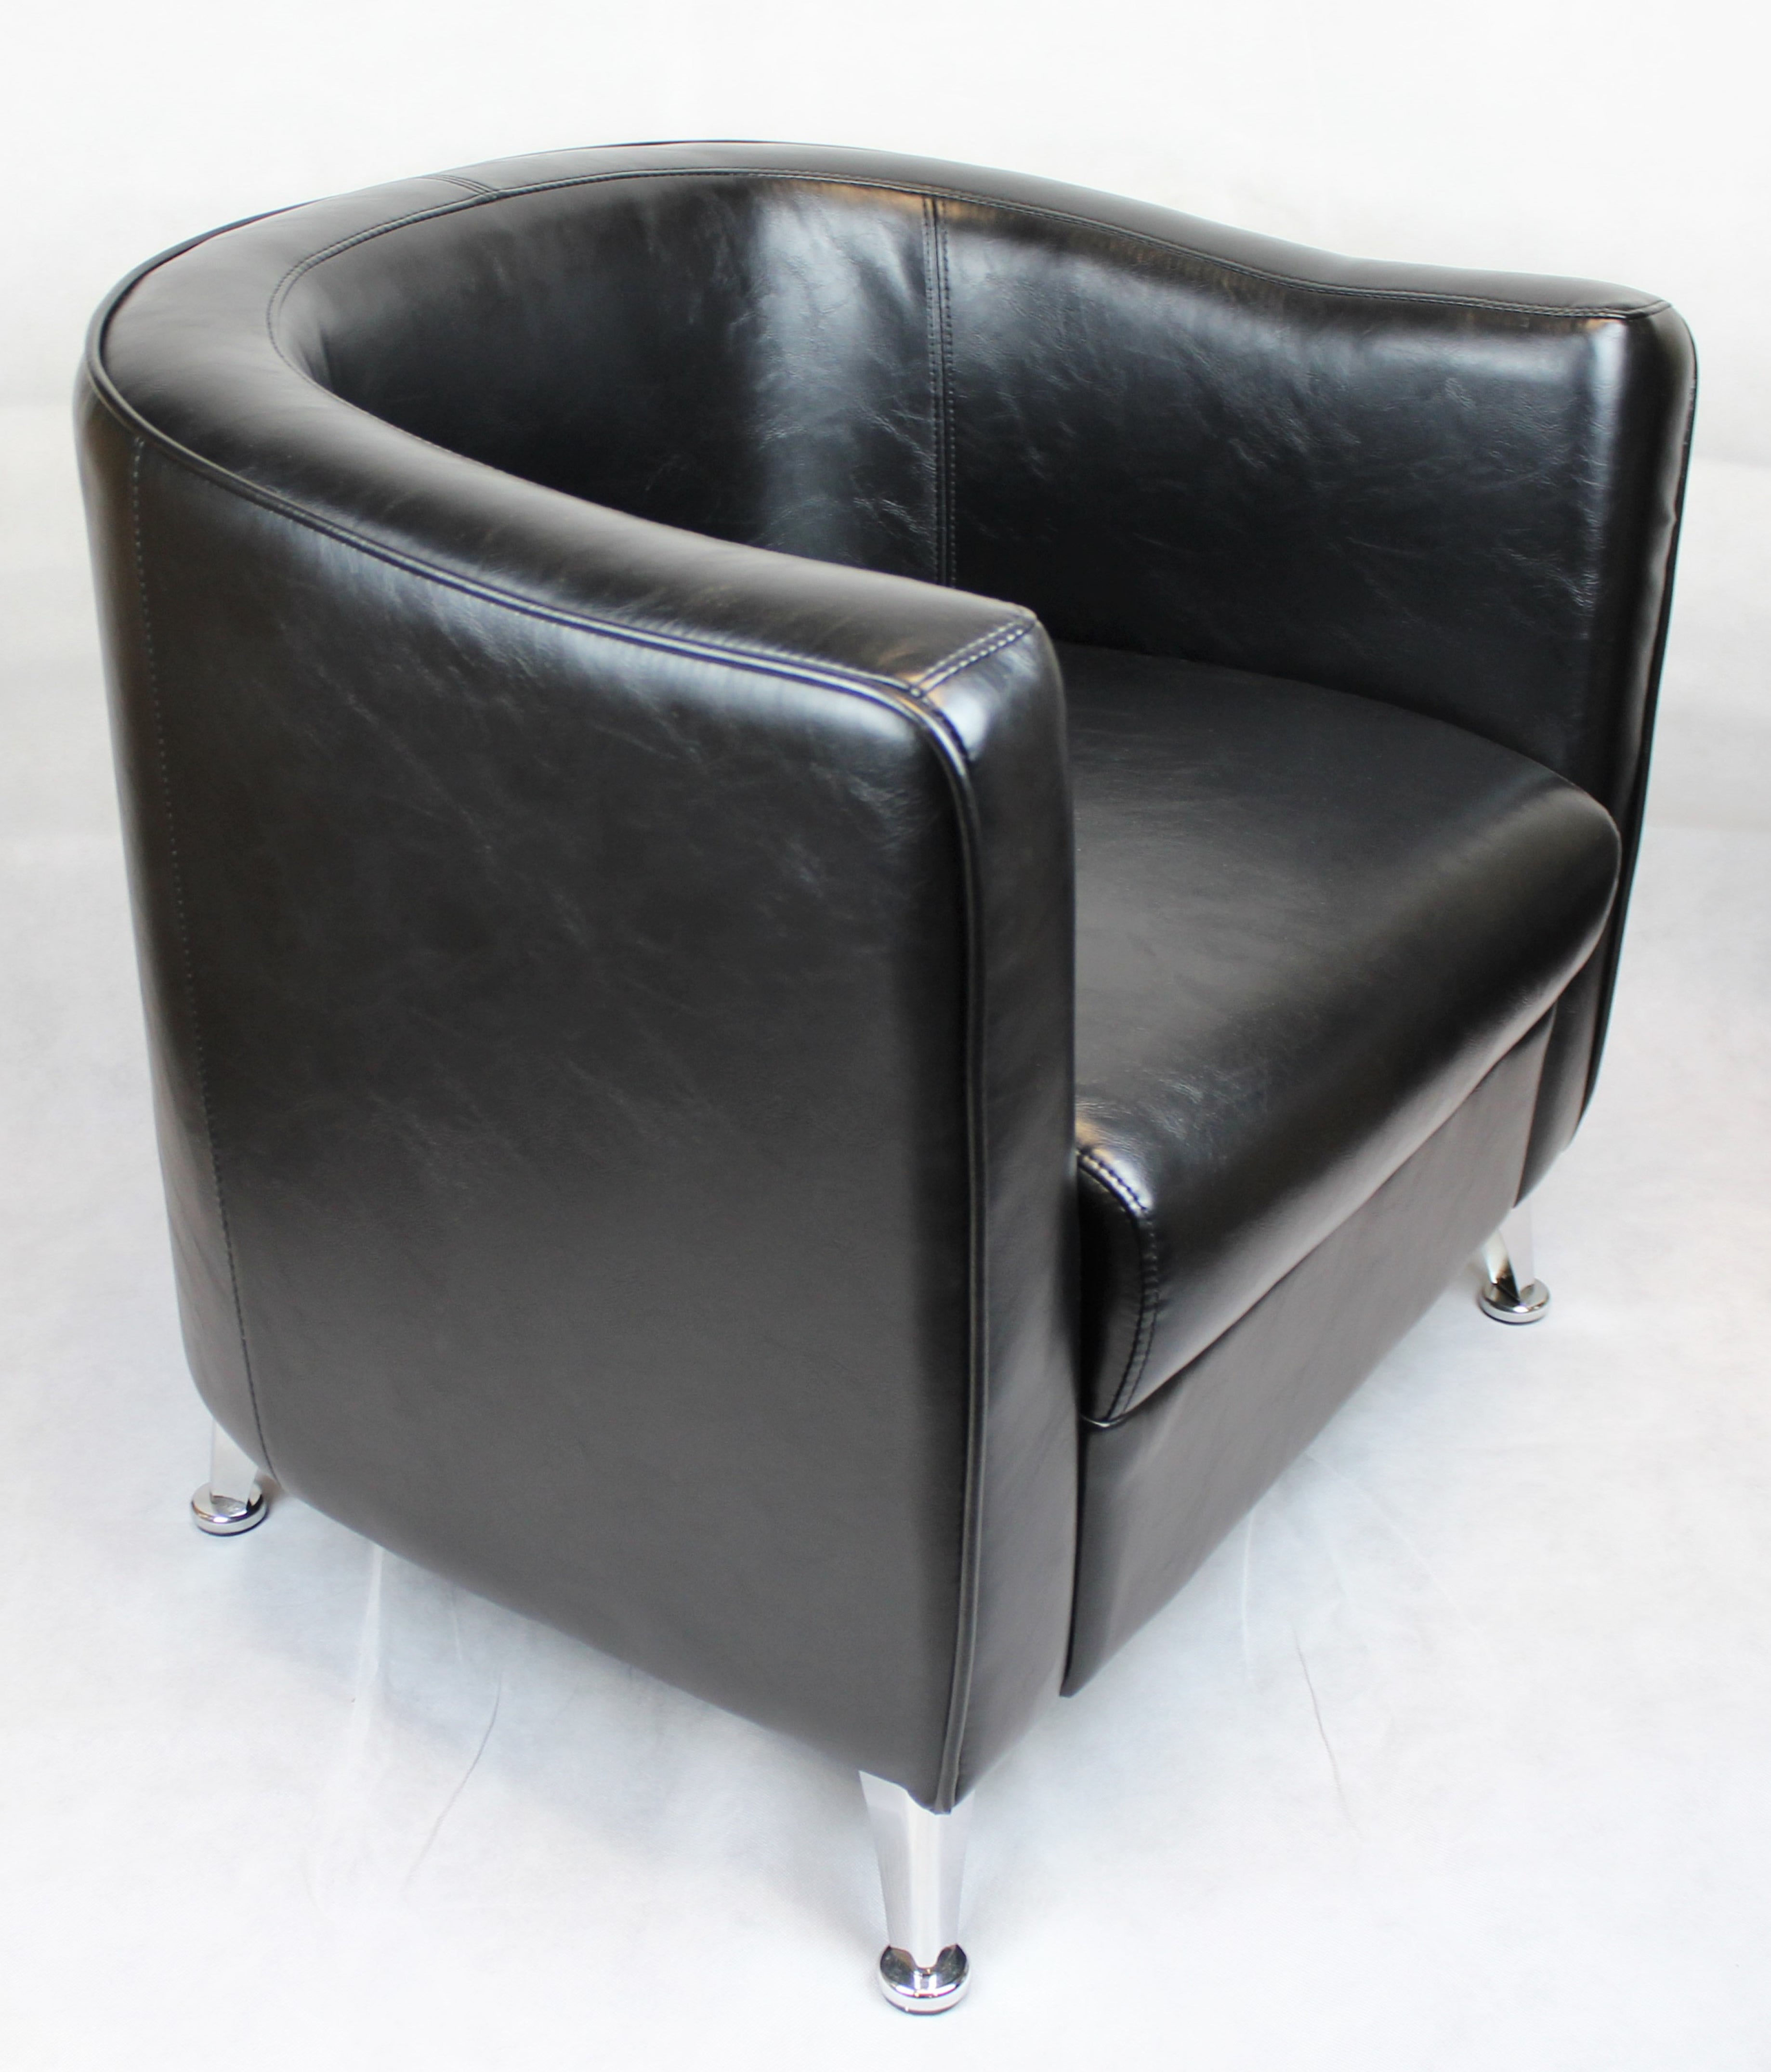 HB-022 Black Tub Reception Chair UK